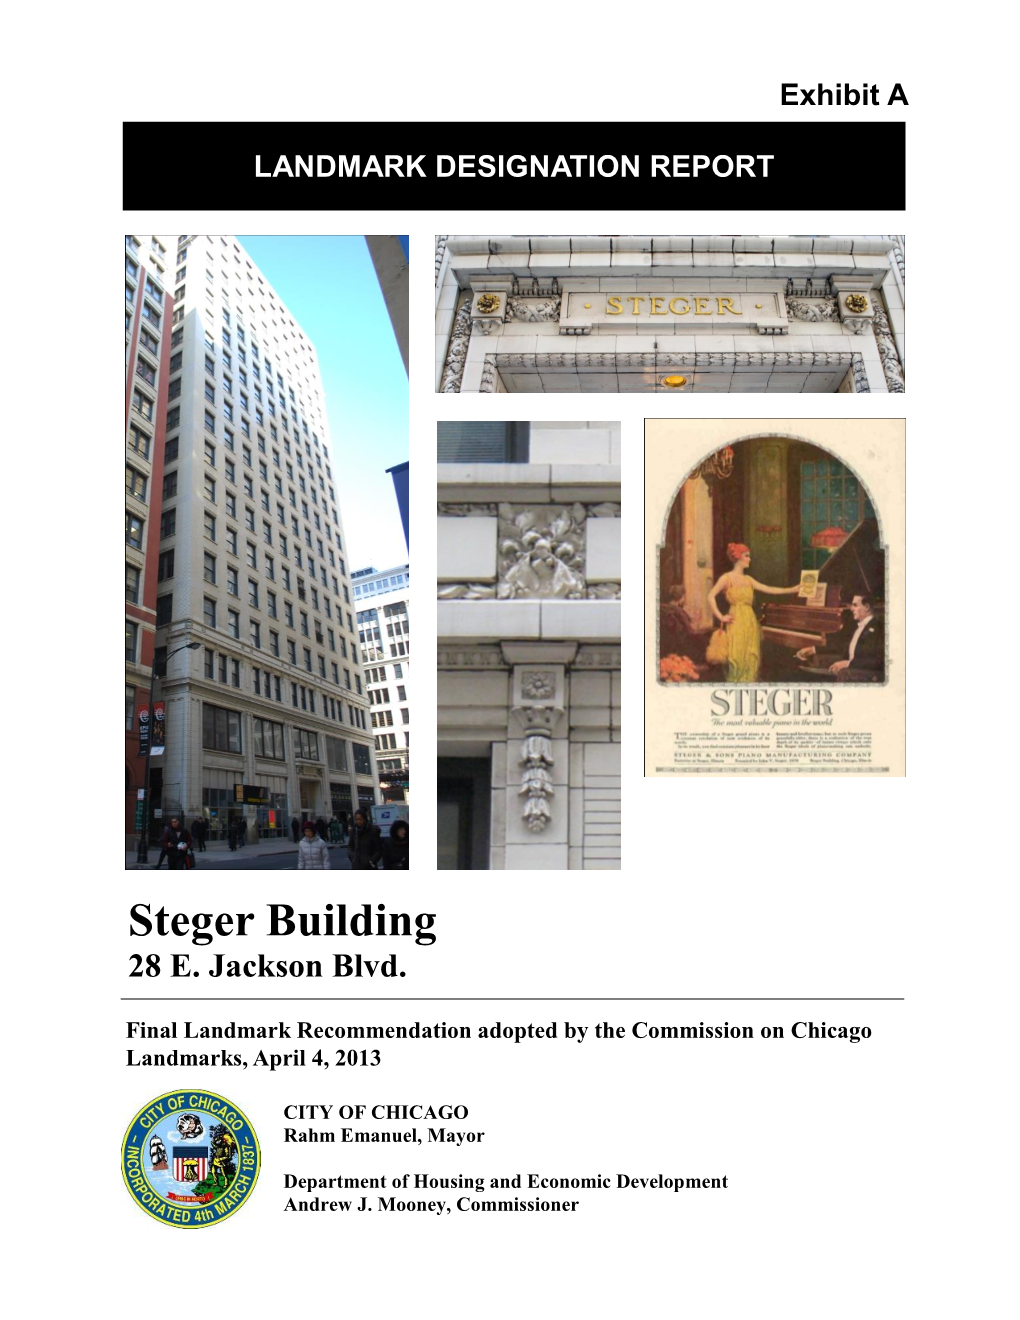 Steger Building Chicago Landmark Designation Report